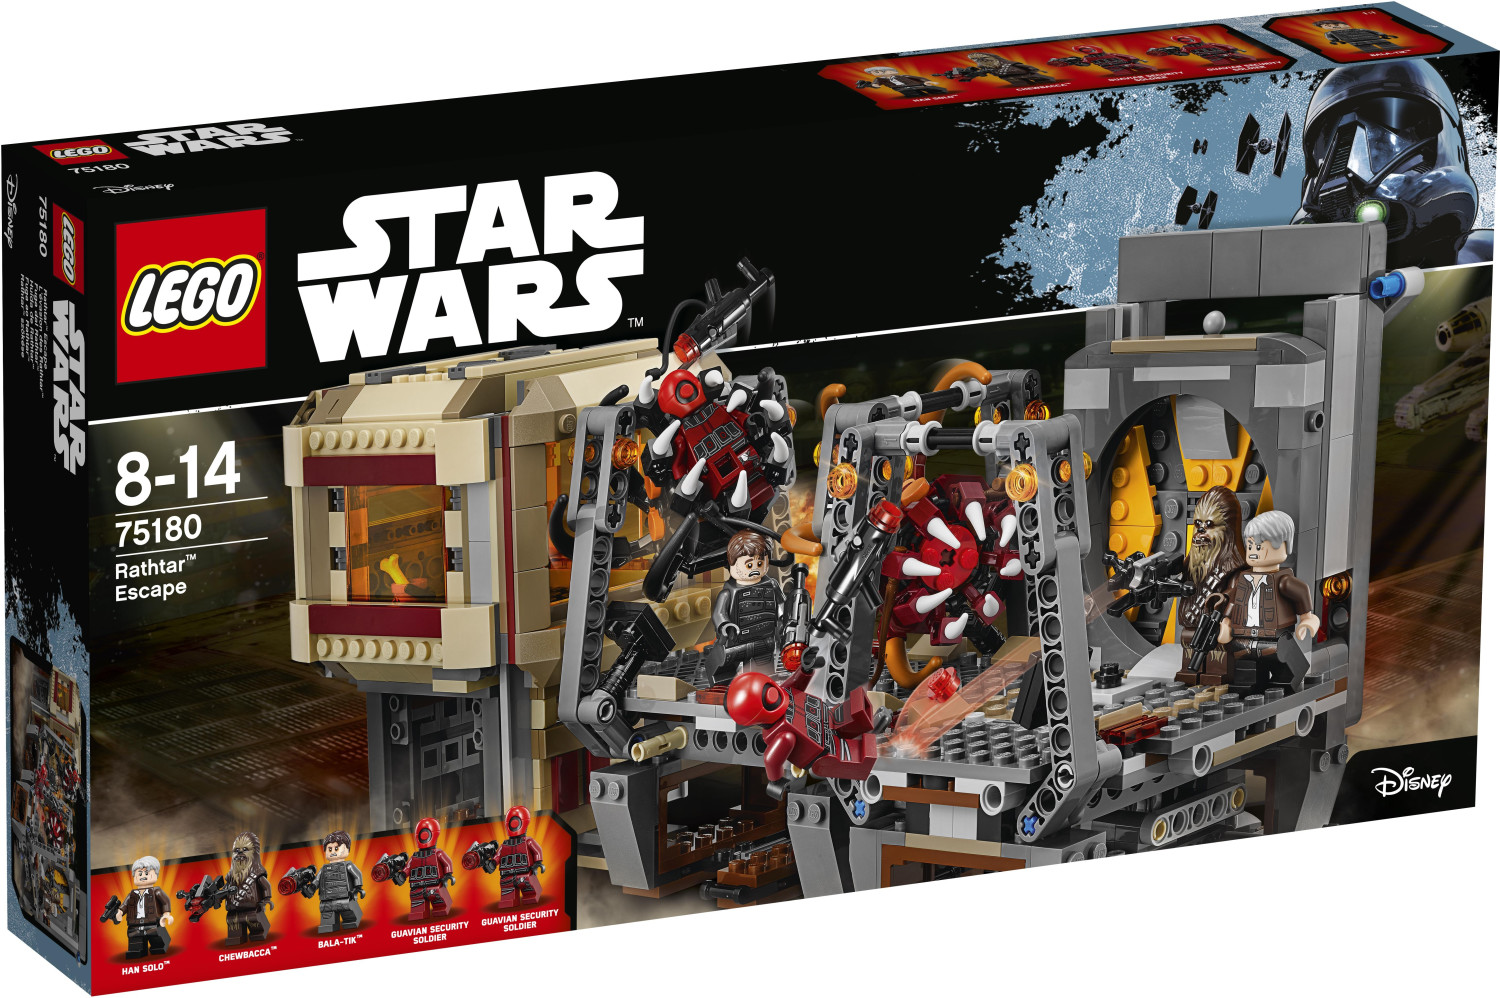 LEGO Star Wars - Rathtar Escape (75180)